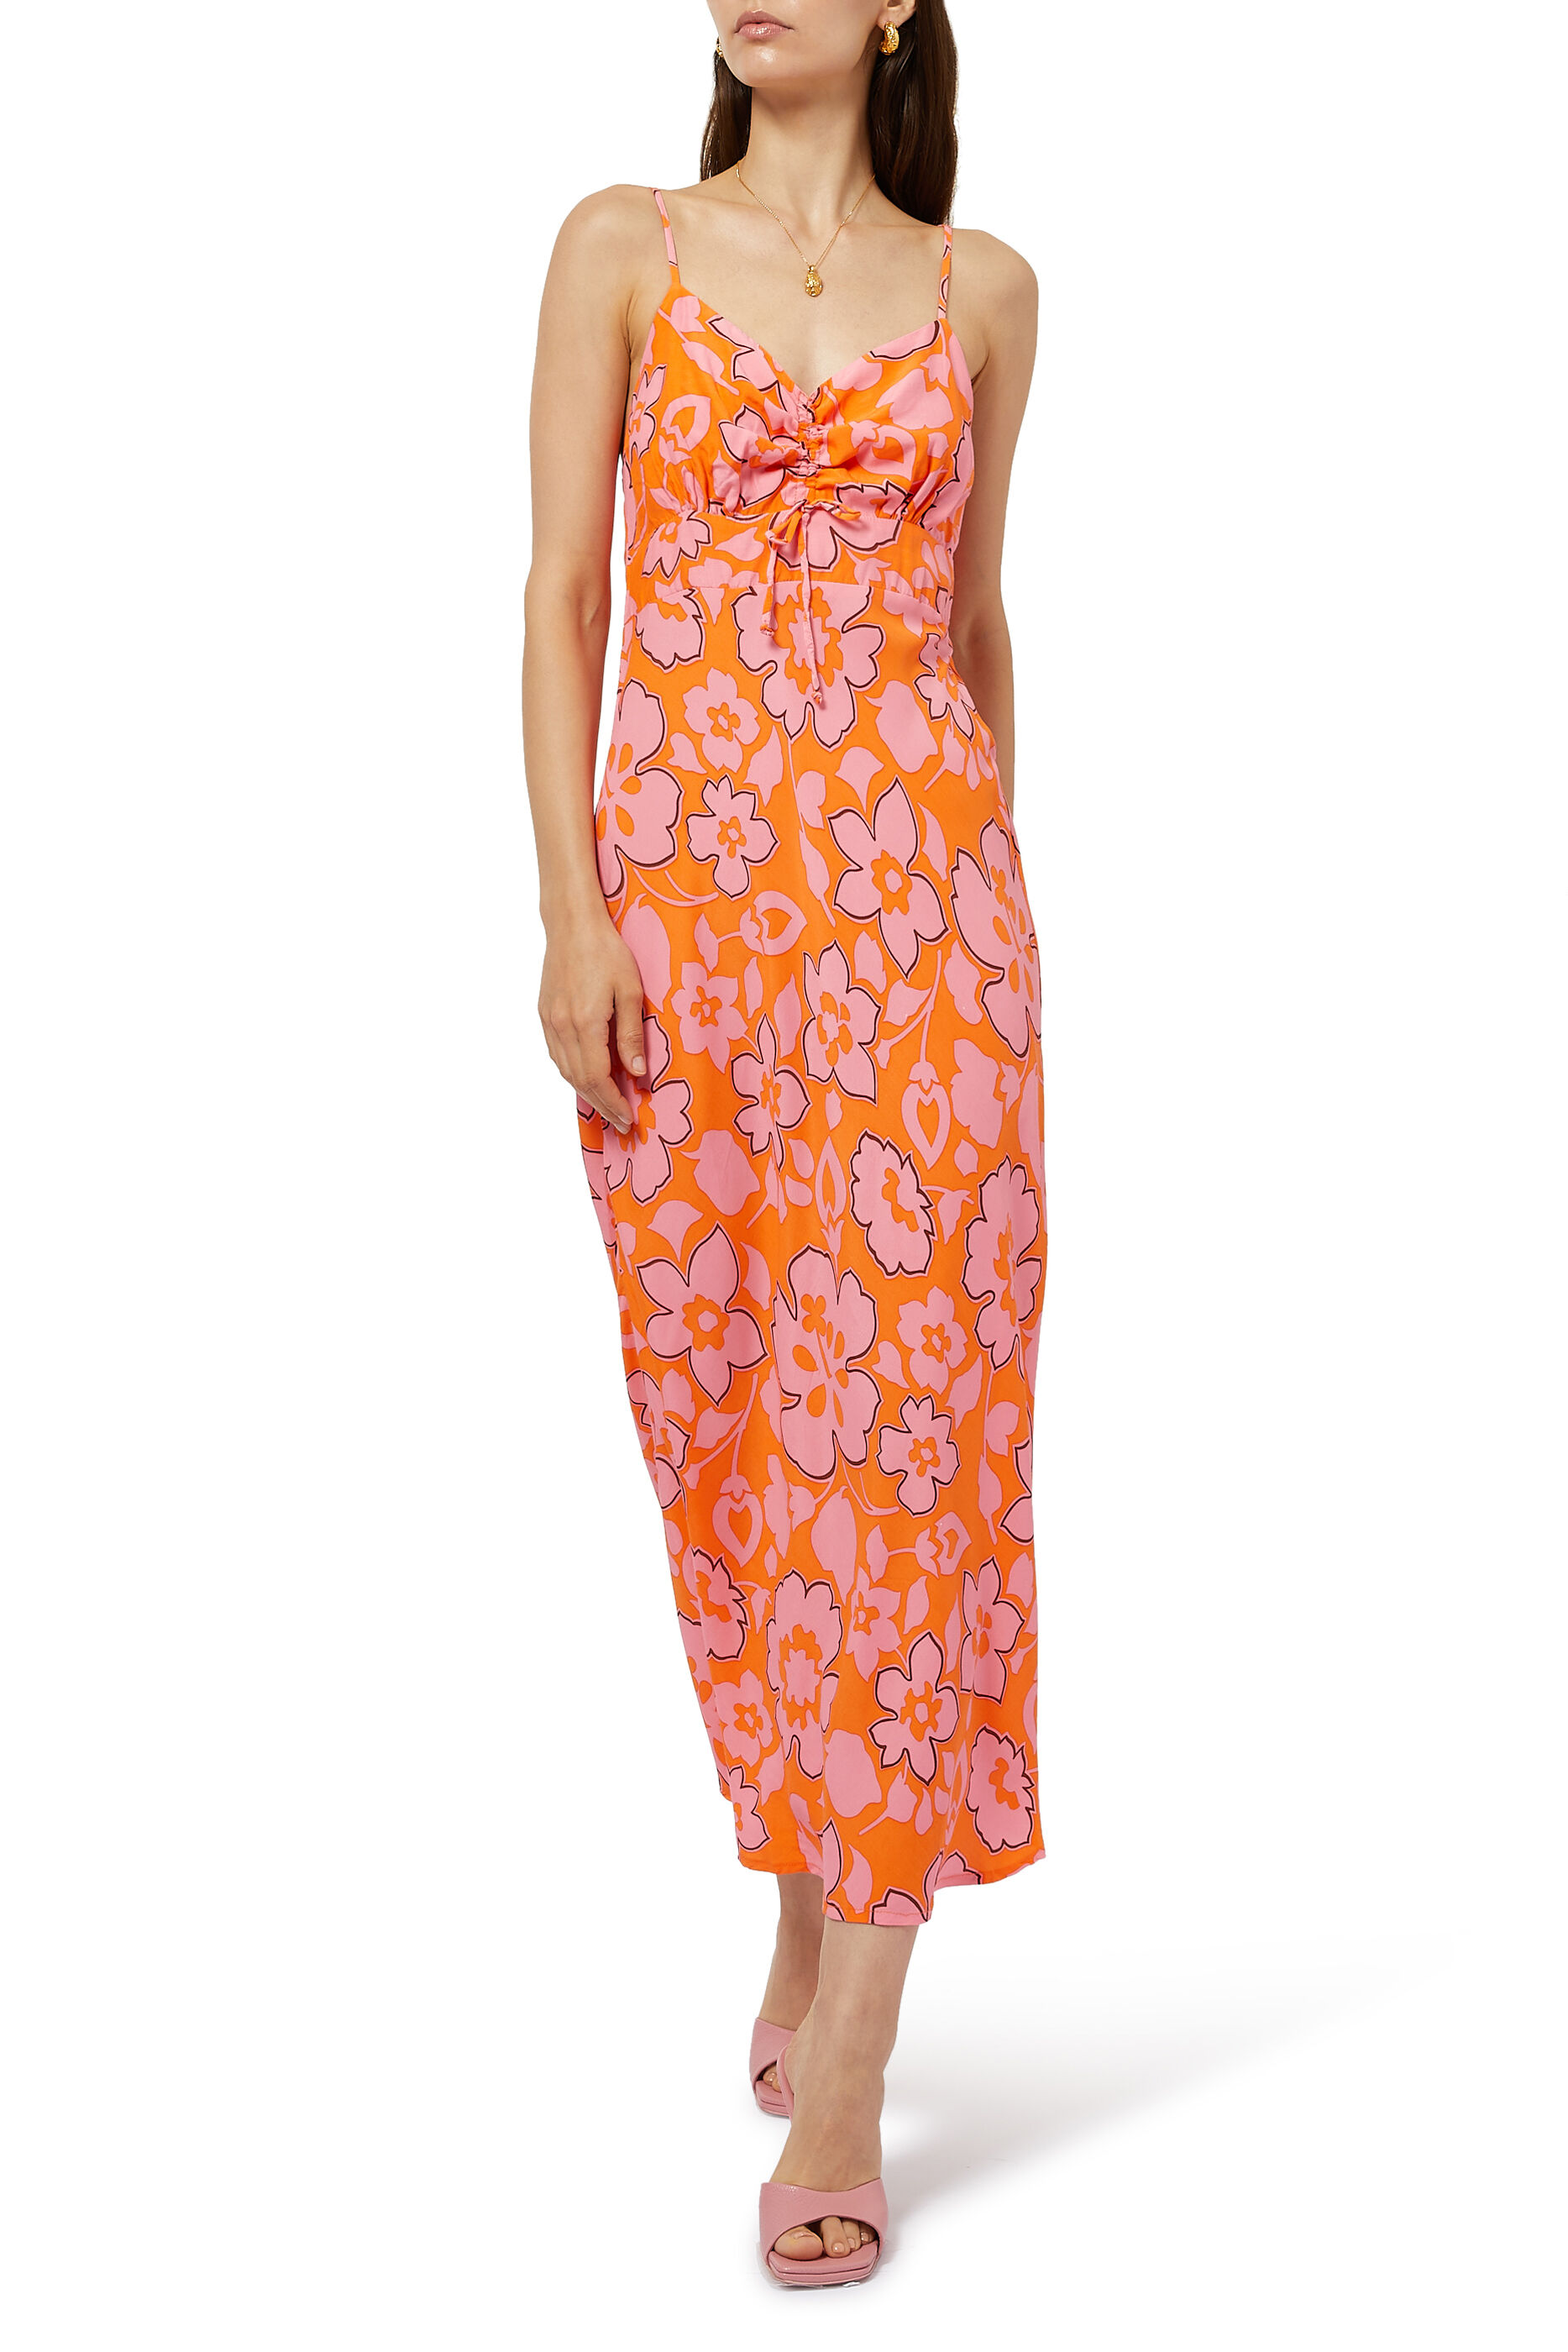 Red 1950s Inspired Halterneck Tropical Frangipani Print Dress  with 34 circle skirt pockets & shirring !